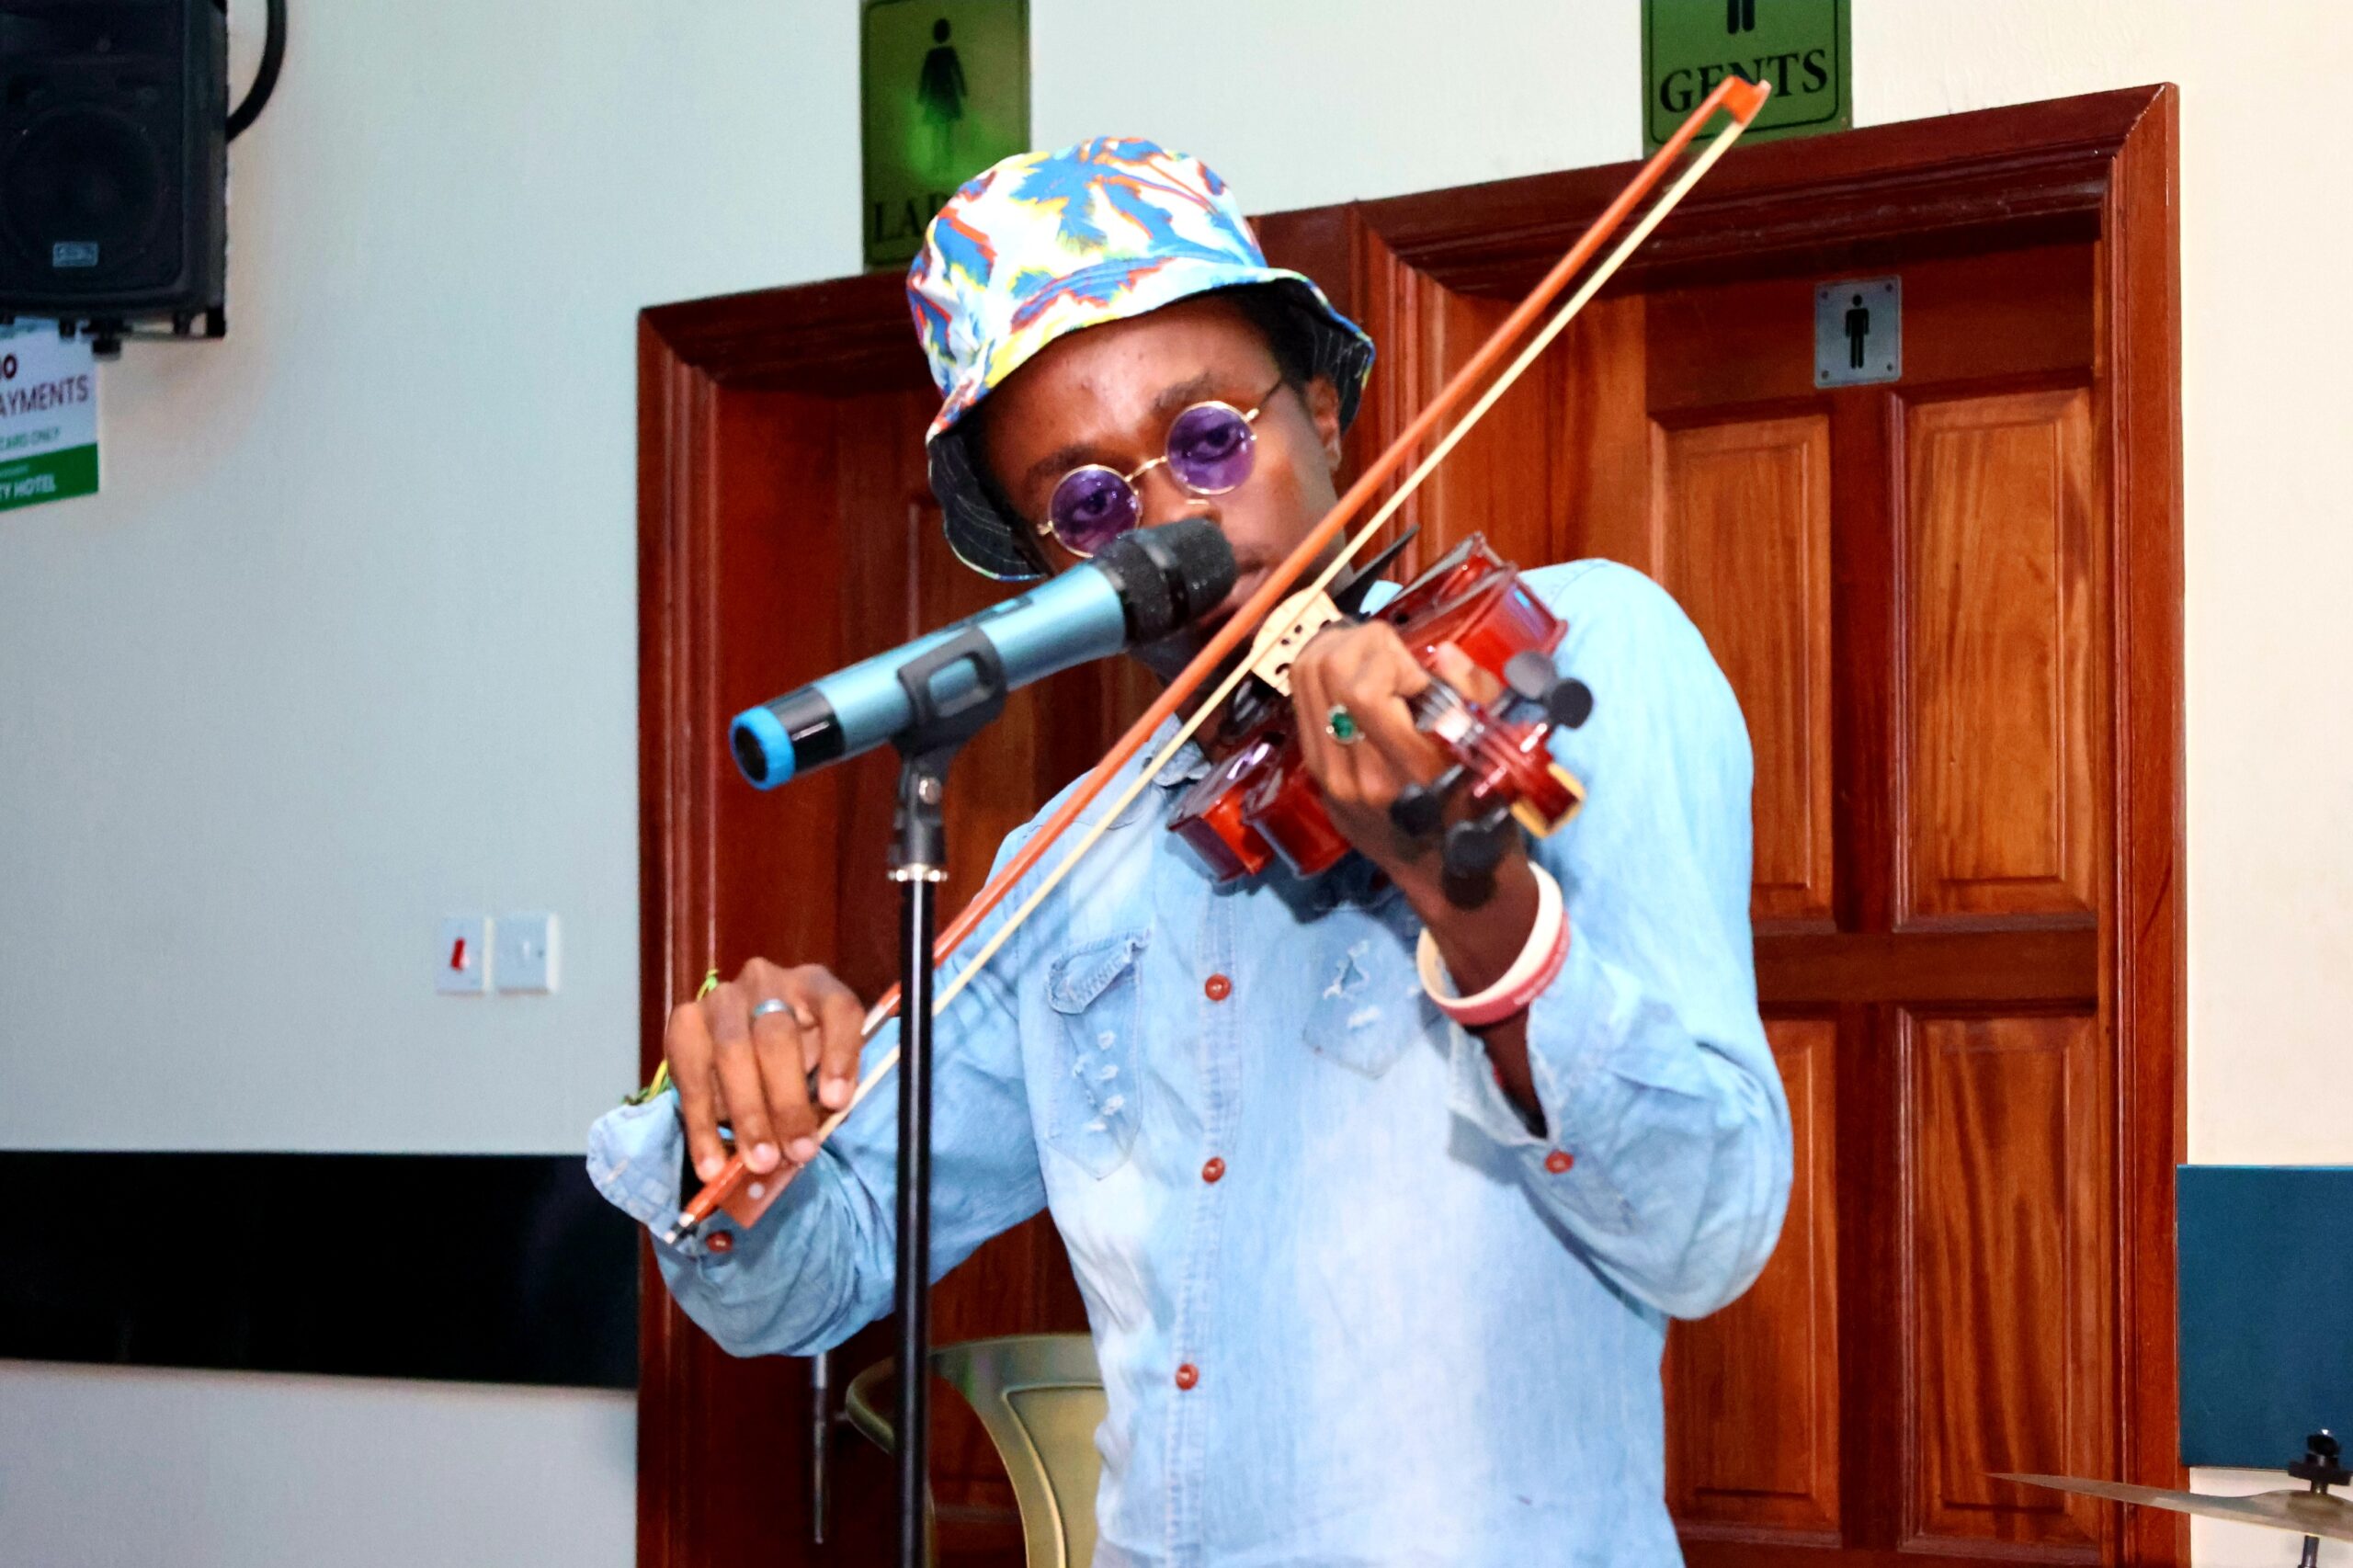 Mutuku Junior plays the violin at EAJAK Talent Tuesdays. PHOTO/COURTESY